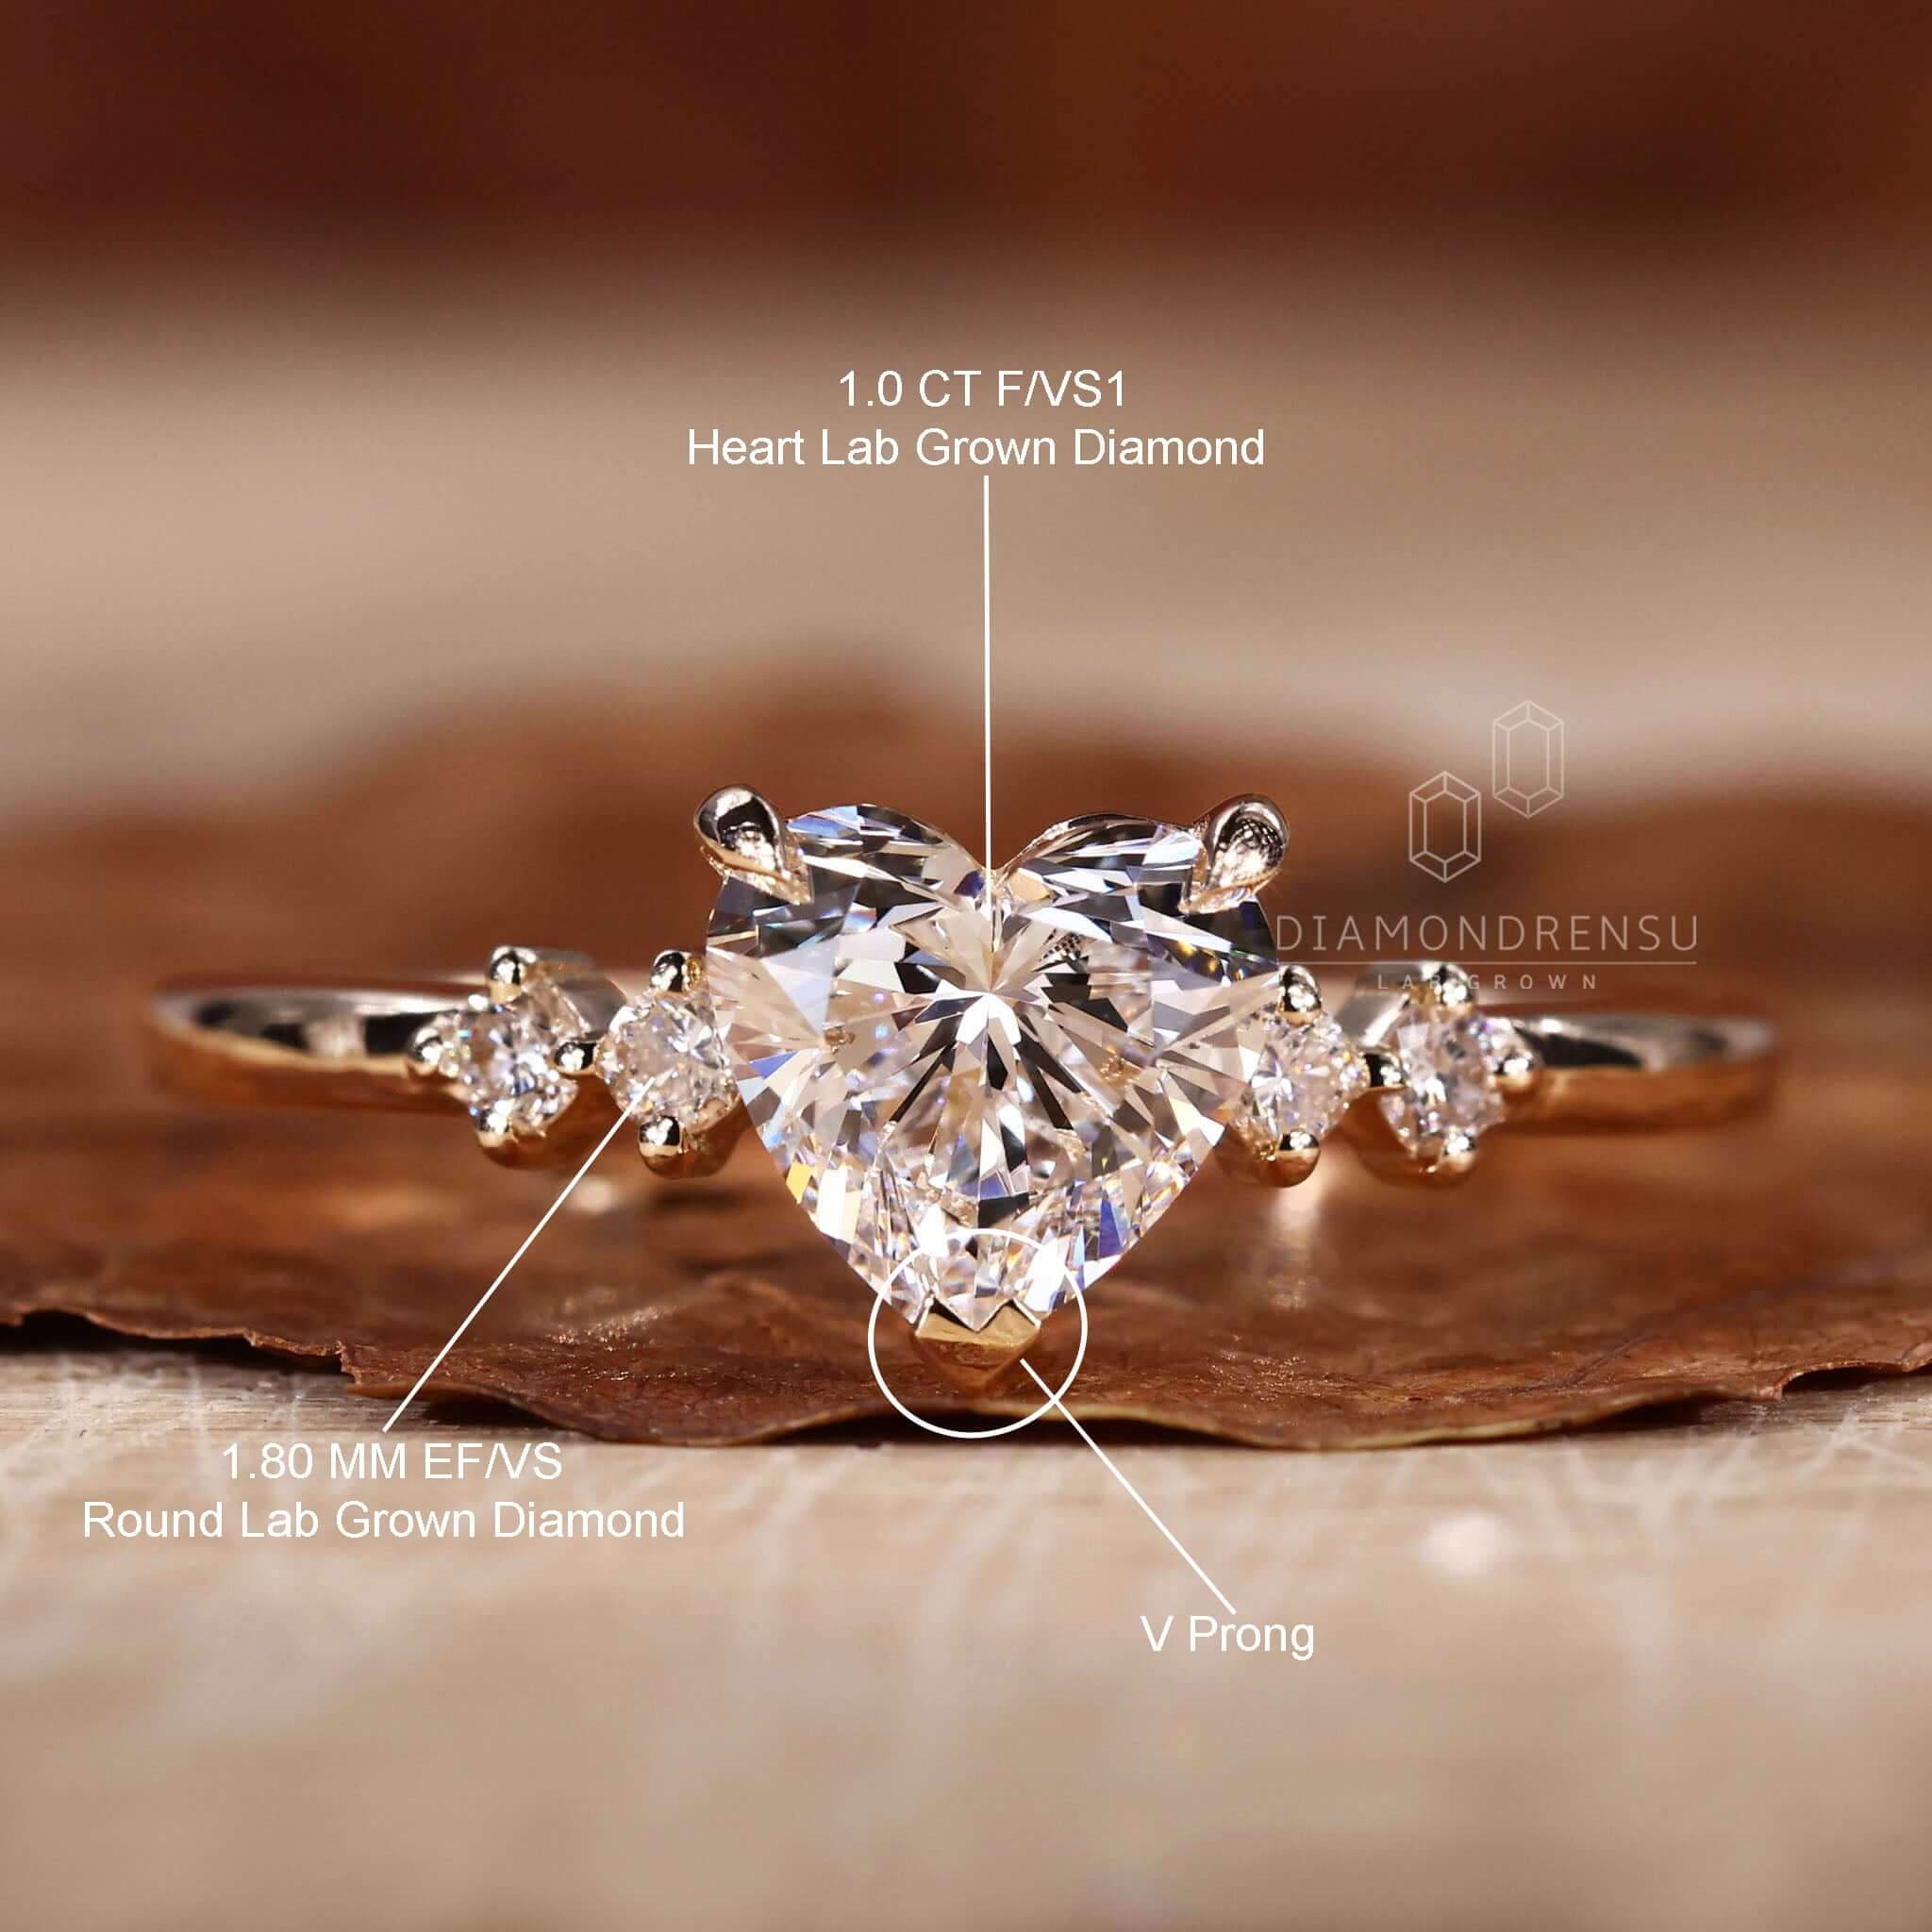 How to Buy a Heart-Shaped Diamond Ring | Ritani